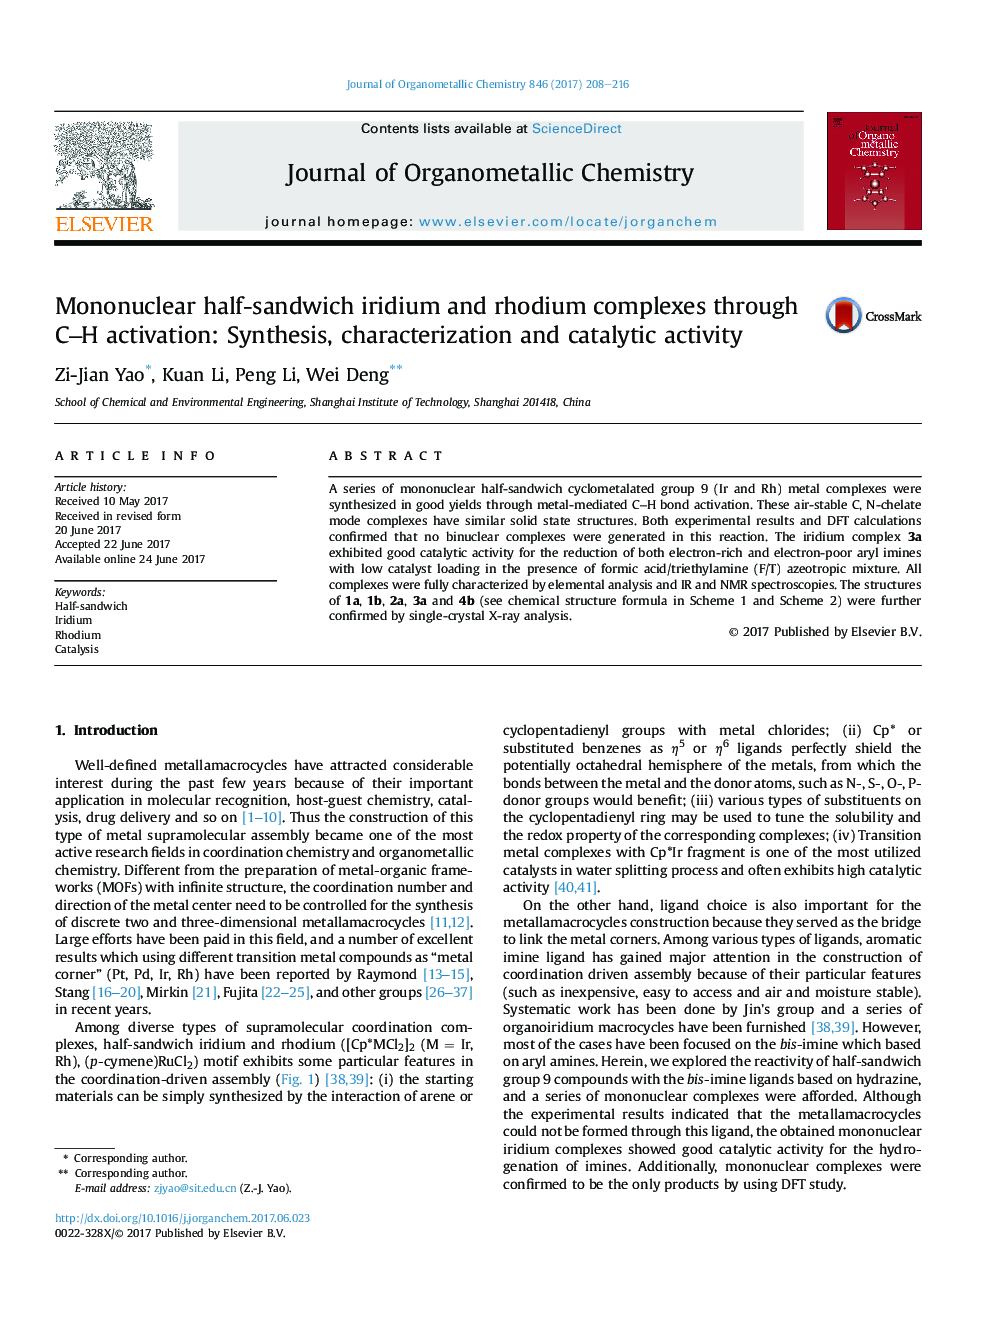 Mononuclear half-sandwich iridium and rhodium complexes through CâH activation: Synthesis, characterization and catalytic activity